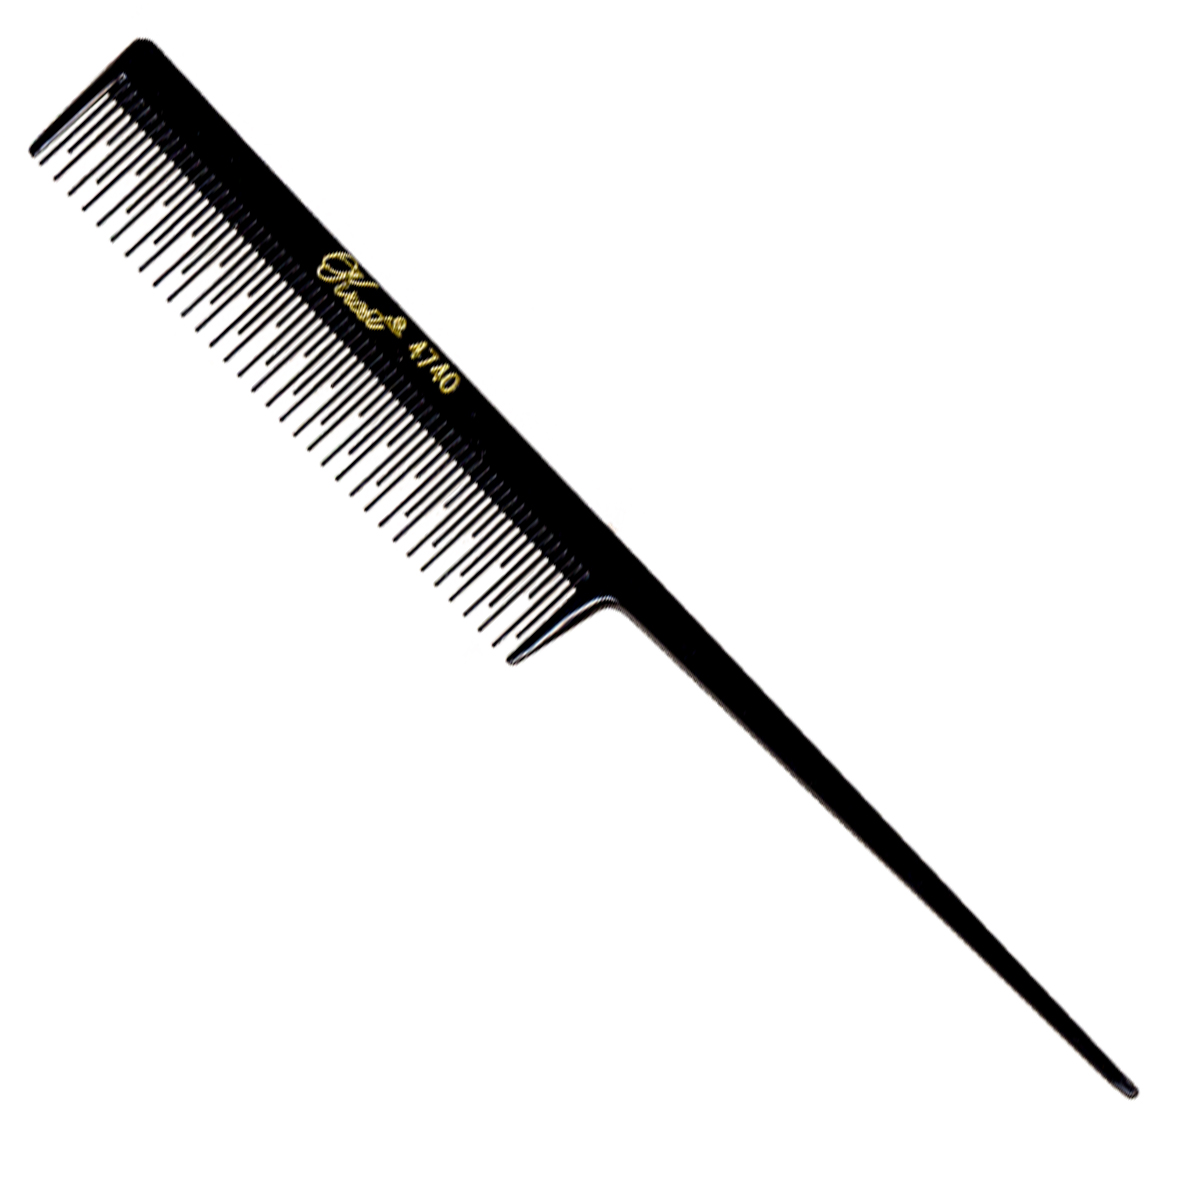 Rattail Teaser Comb